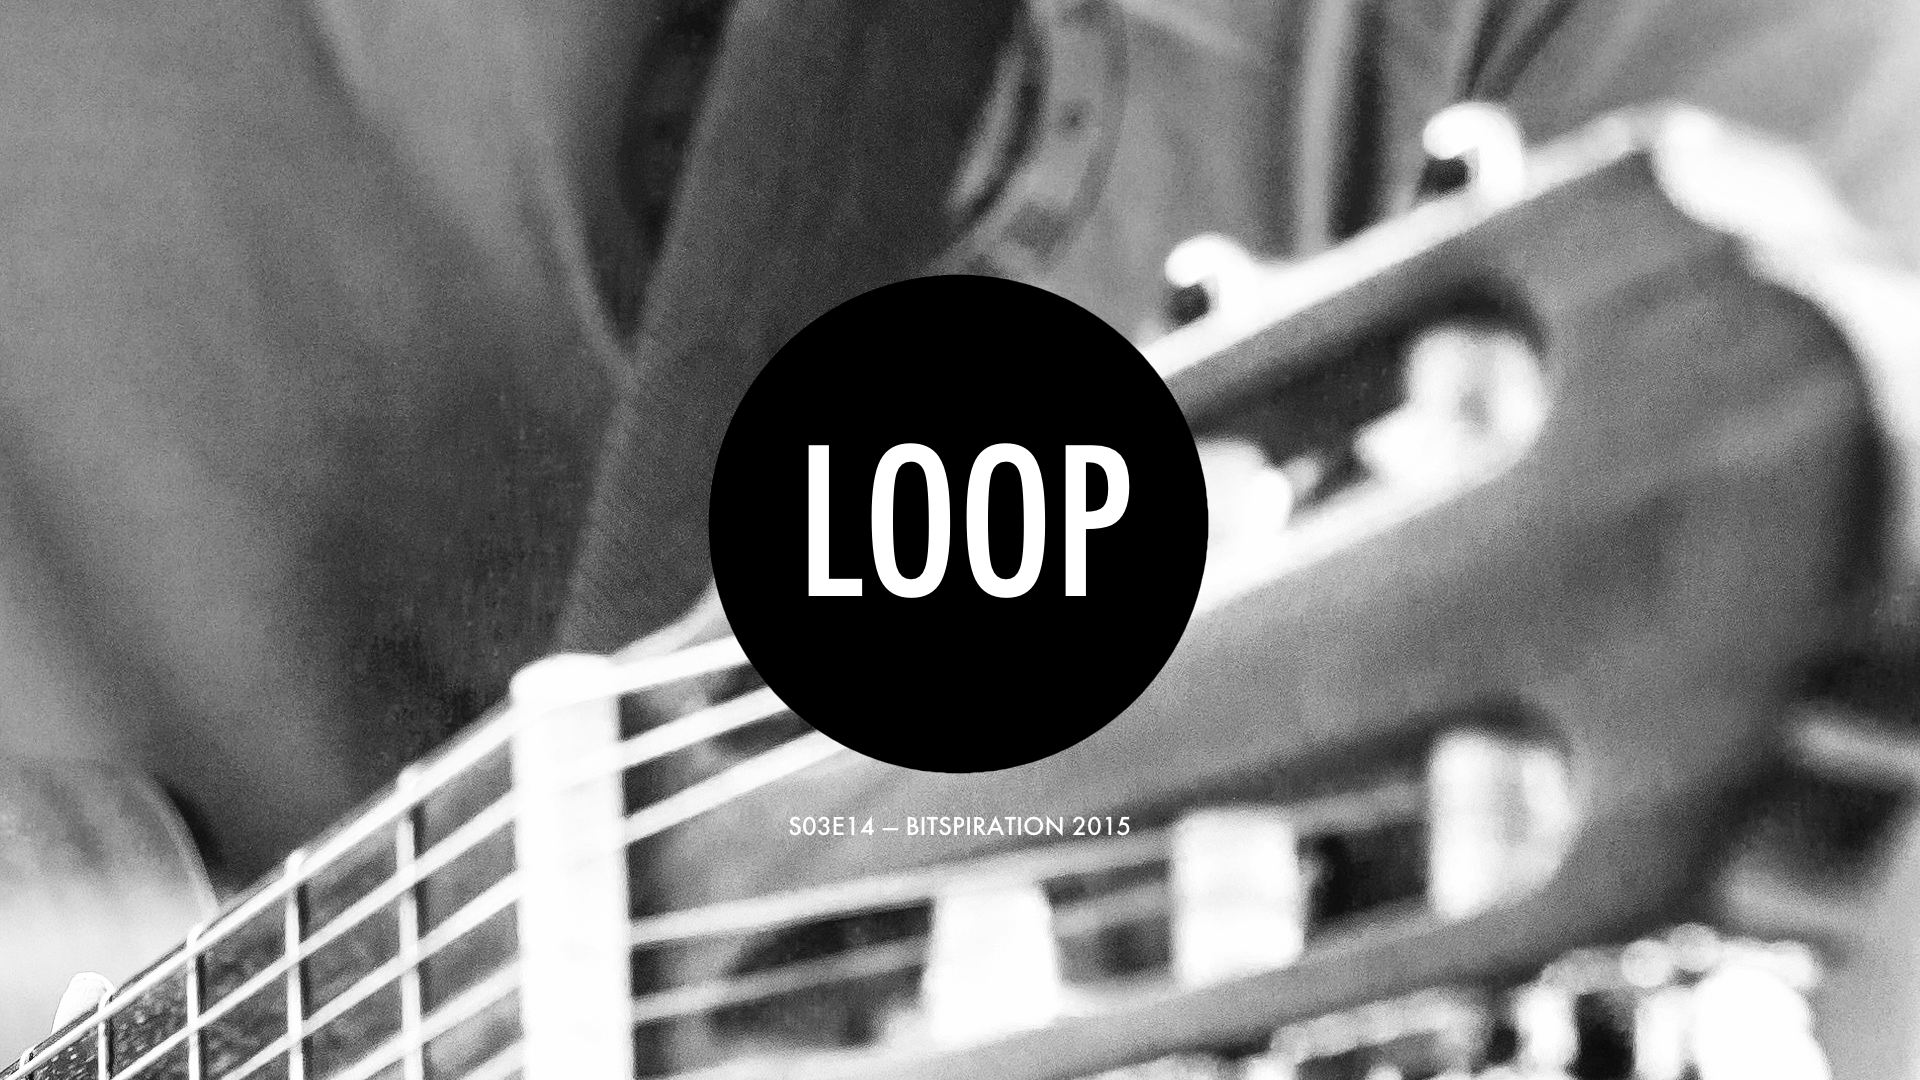 S03E14 Bitspiration 2015 — The Digital Loop